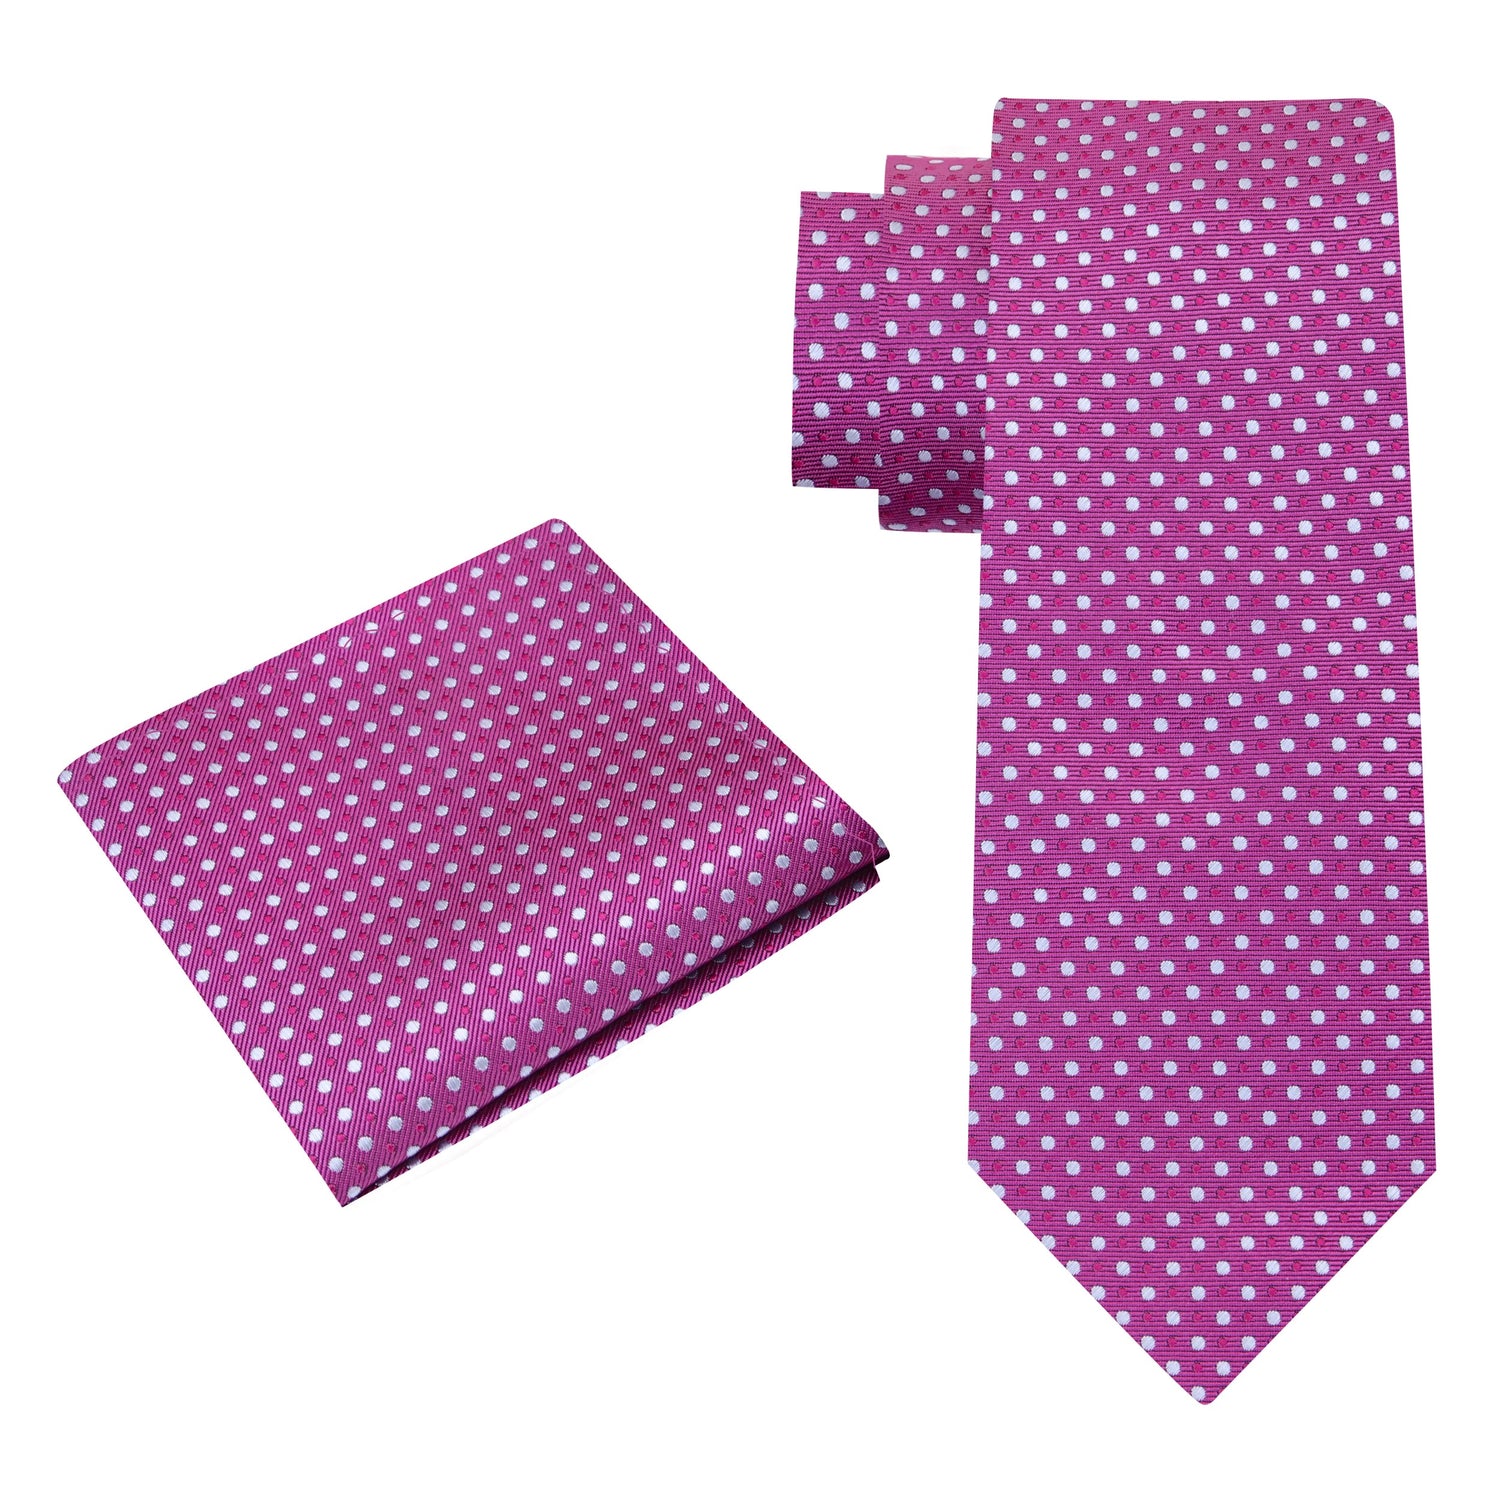 Alt View: A Light Purple, Grey Polka Dot Pattern Silk Necktie, Matching Pocket Square